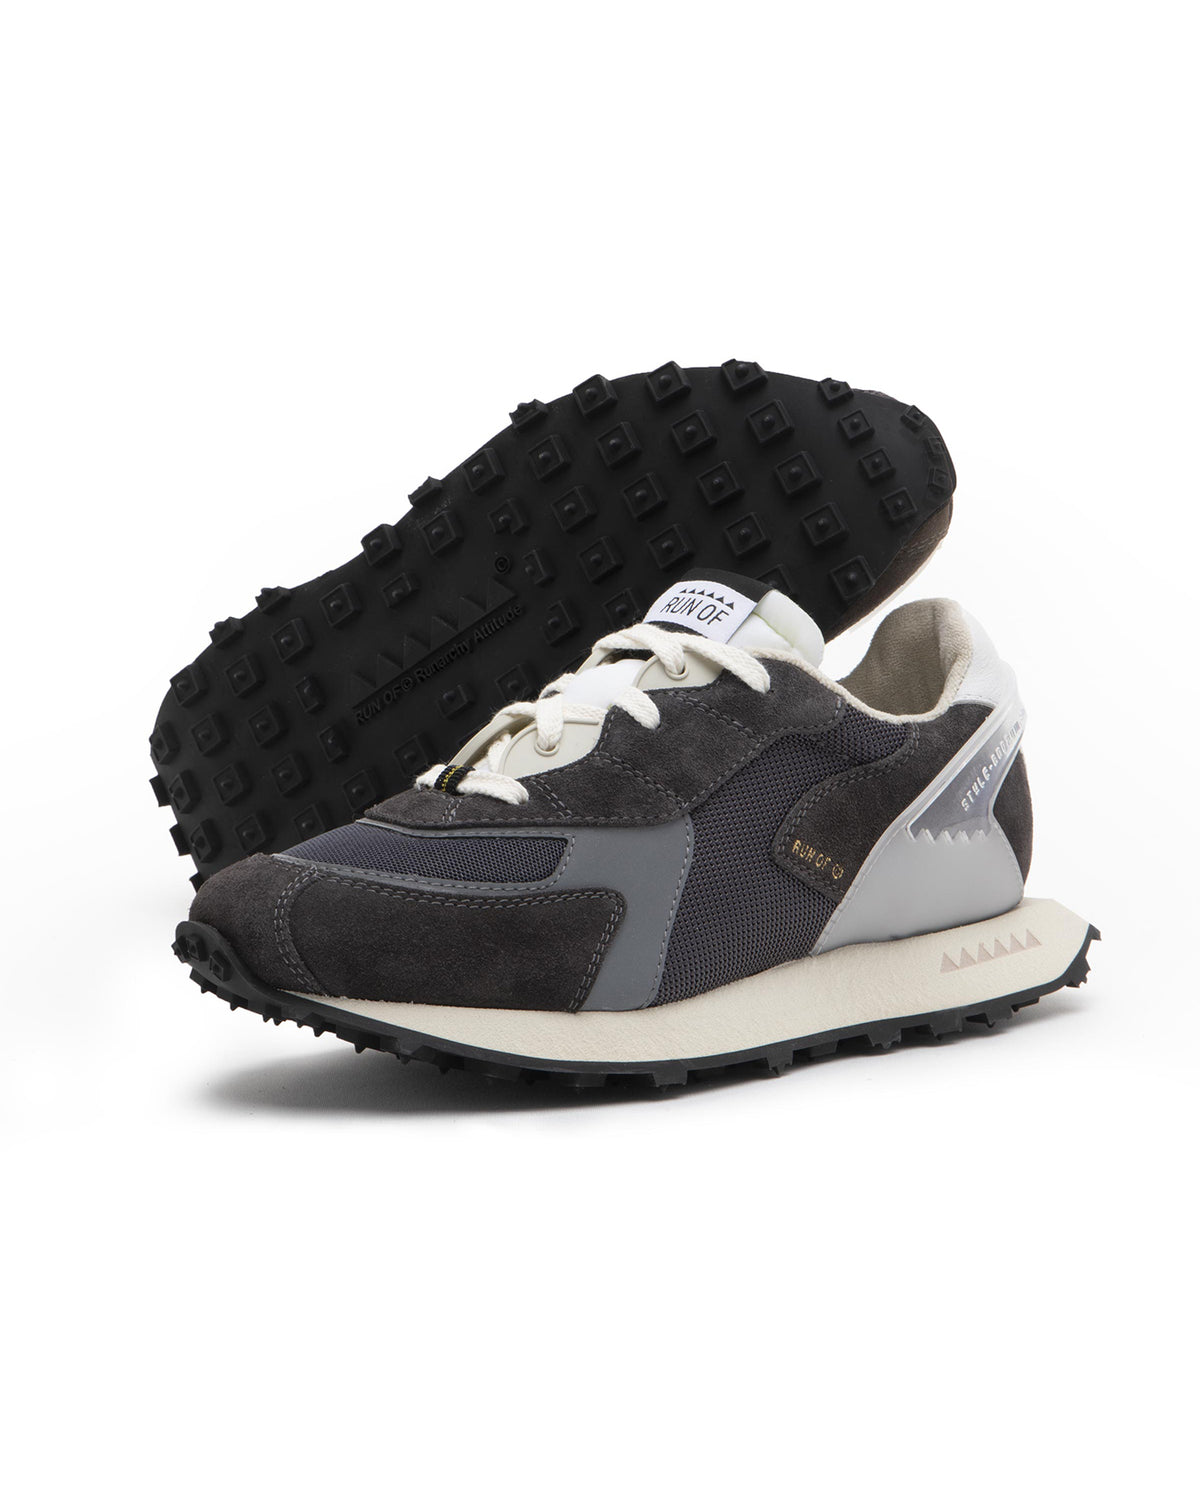 Grau Tonal Leather Sneakers - Charcoal